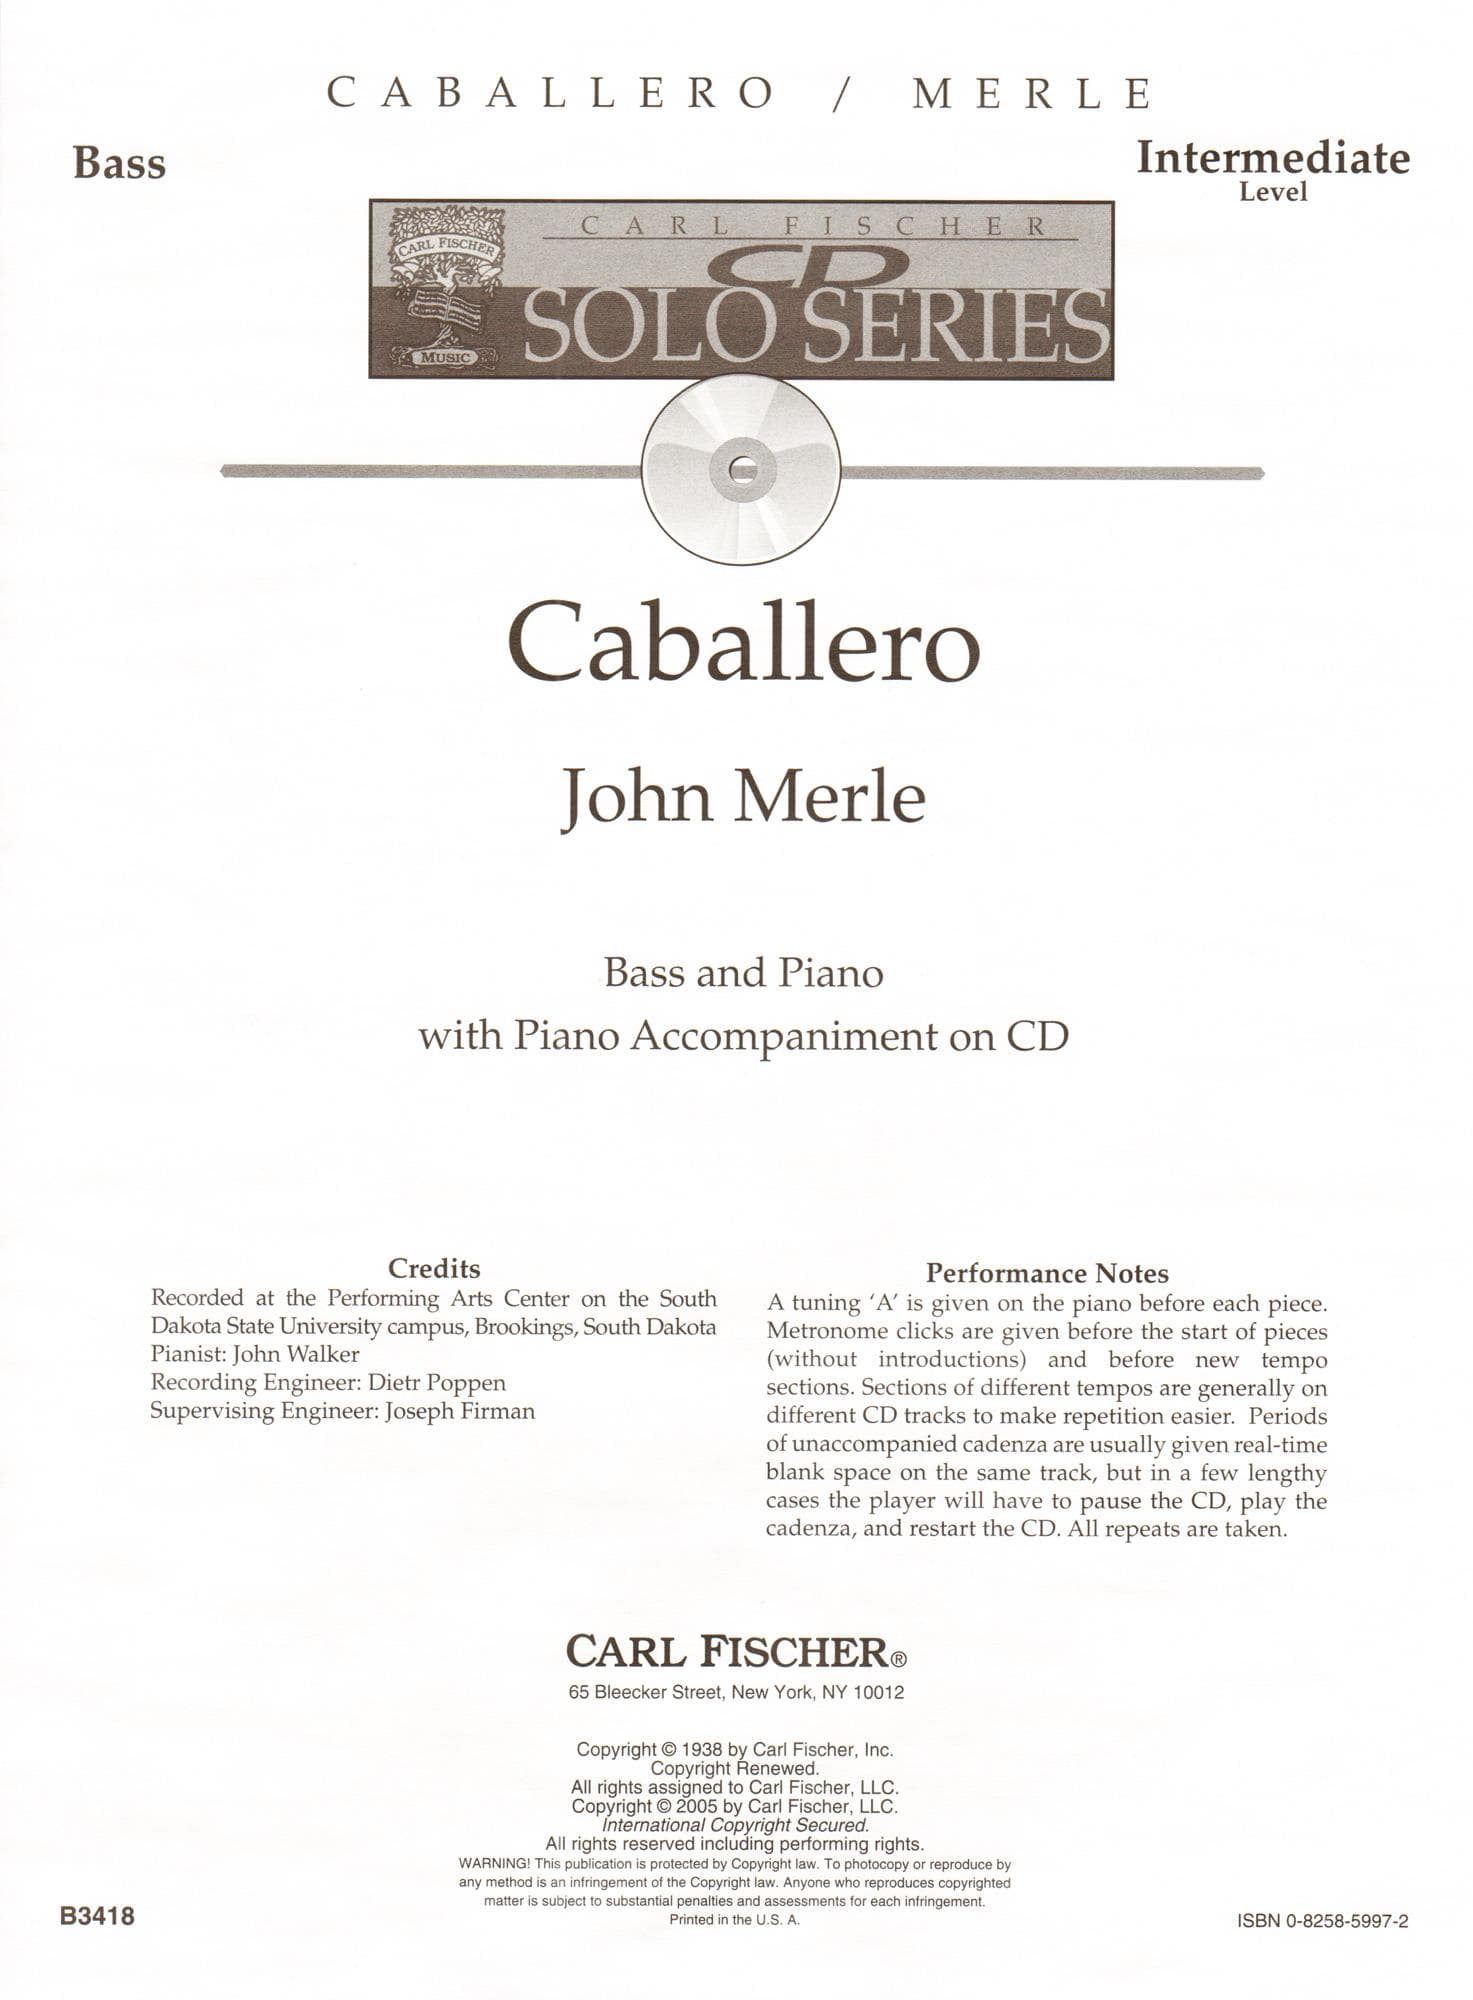 Merle, John - Caballero - Bass and Piano - Book/CD set - Carl Fischer Edition